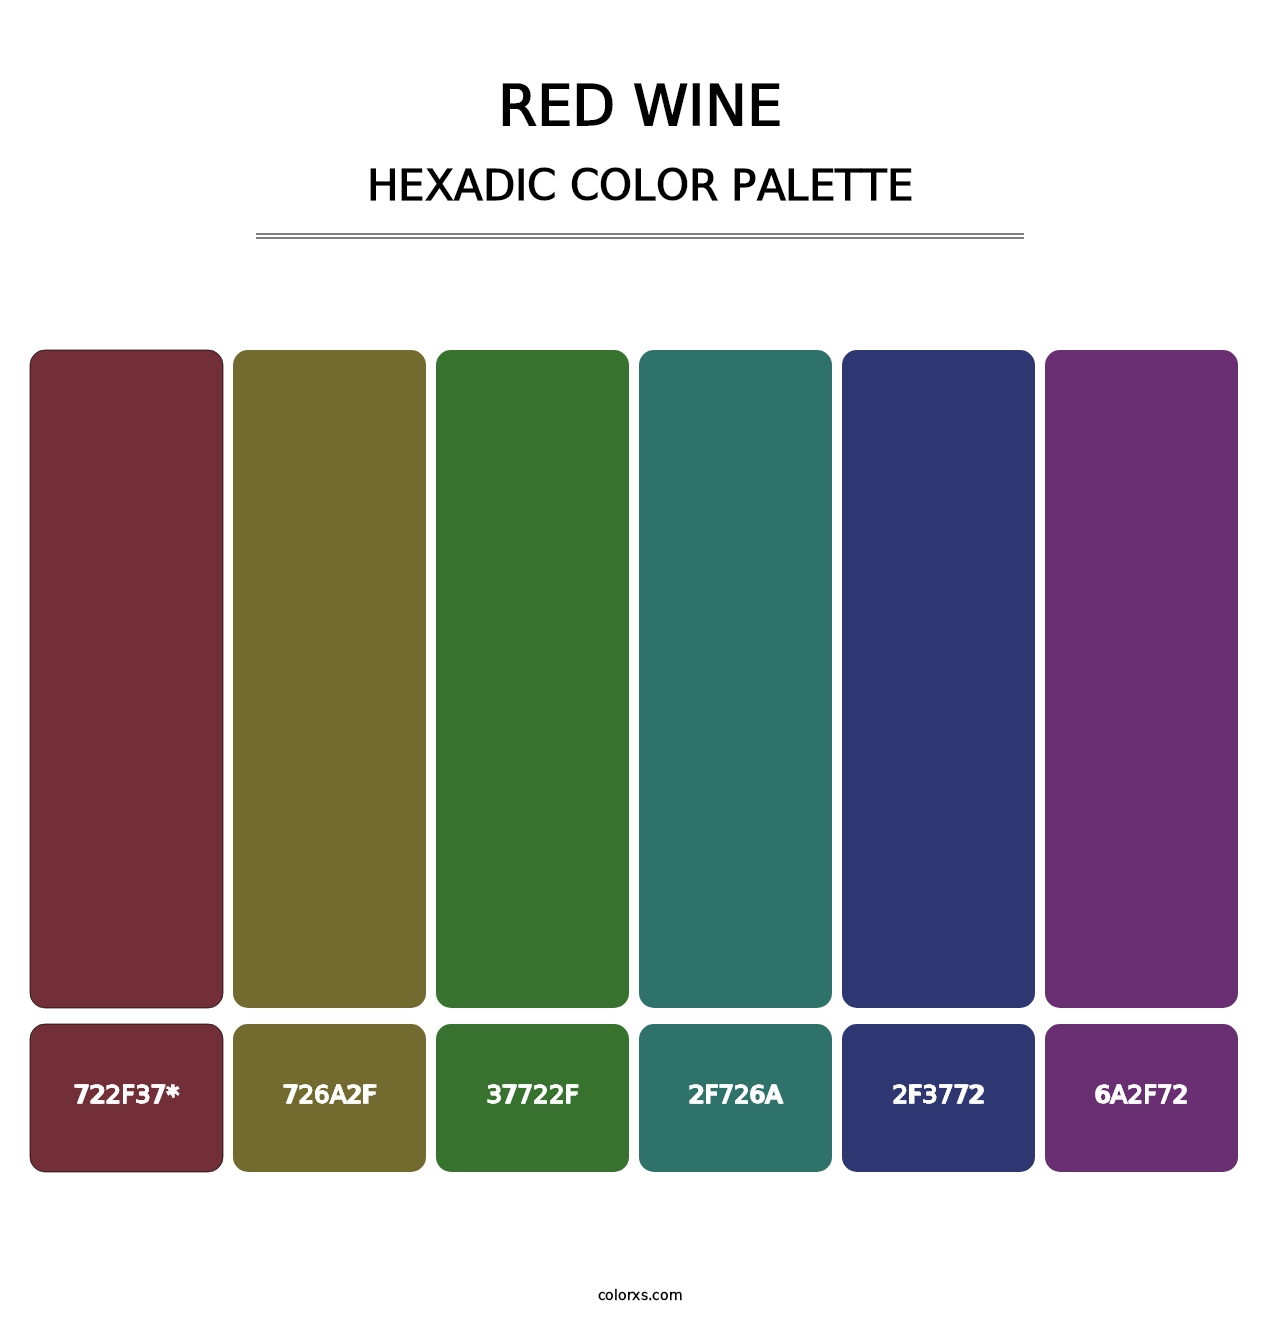 Red Wine - Hexadic Color Palette